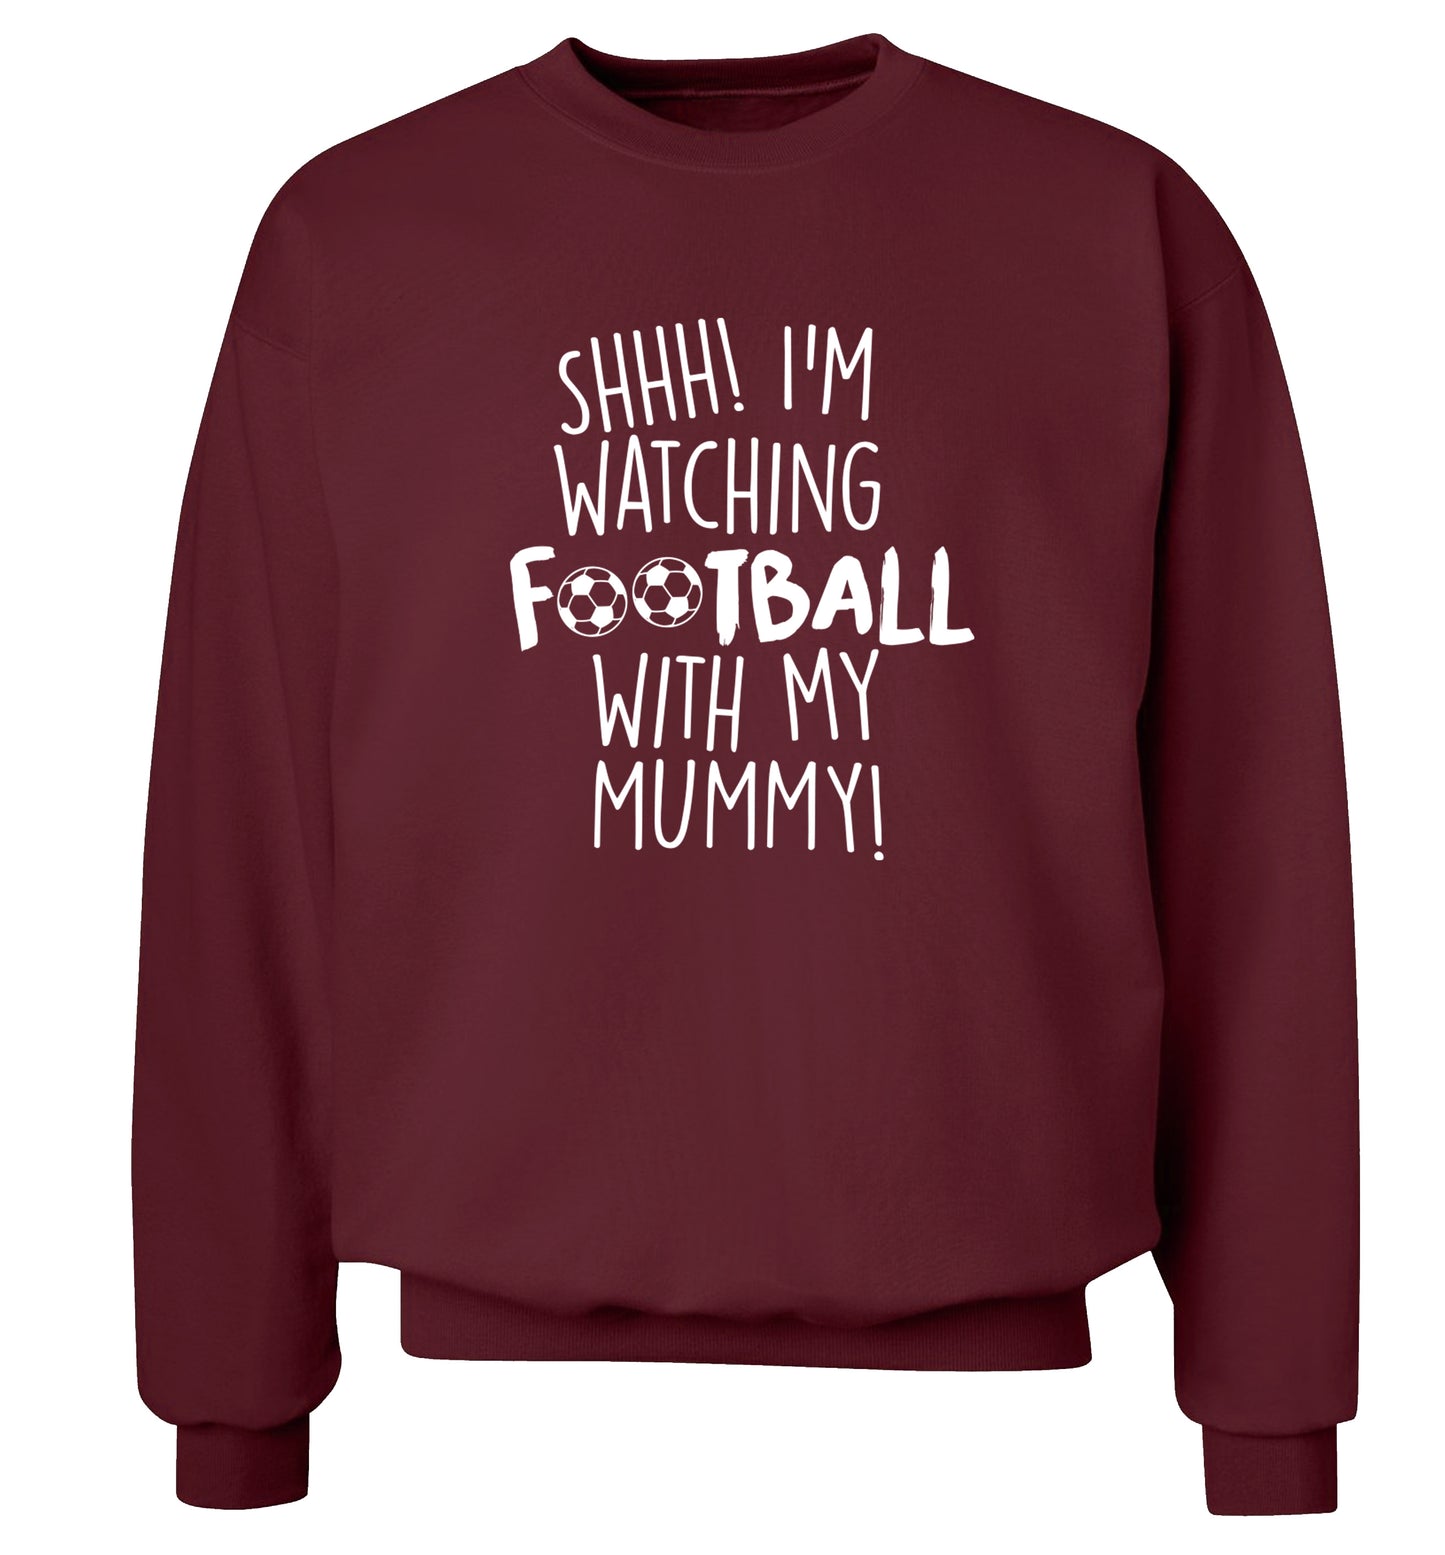 Shhh I'm watching football with my mummy Adult's unisexmaroon Sweater 2XL